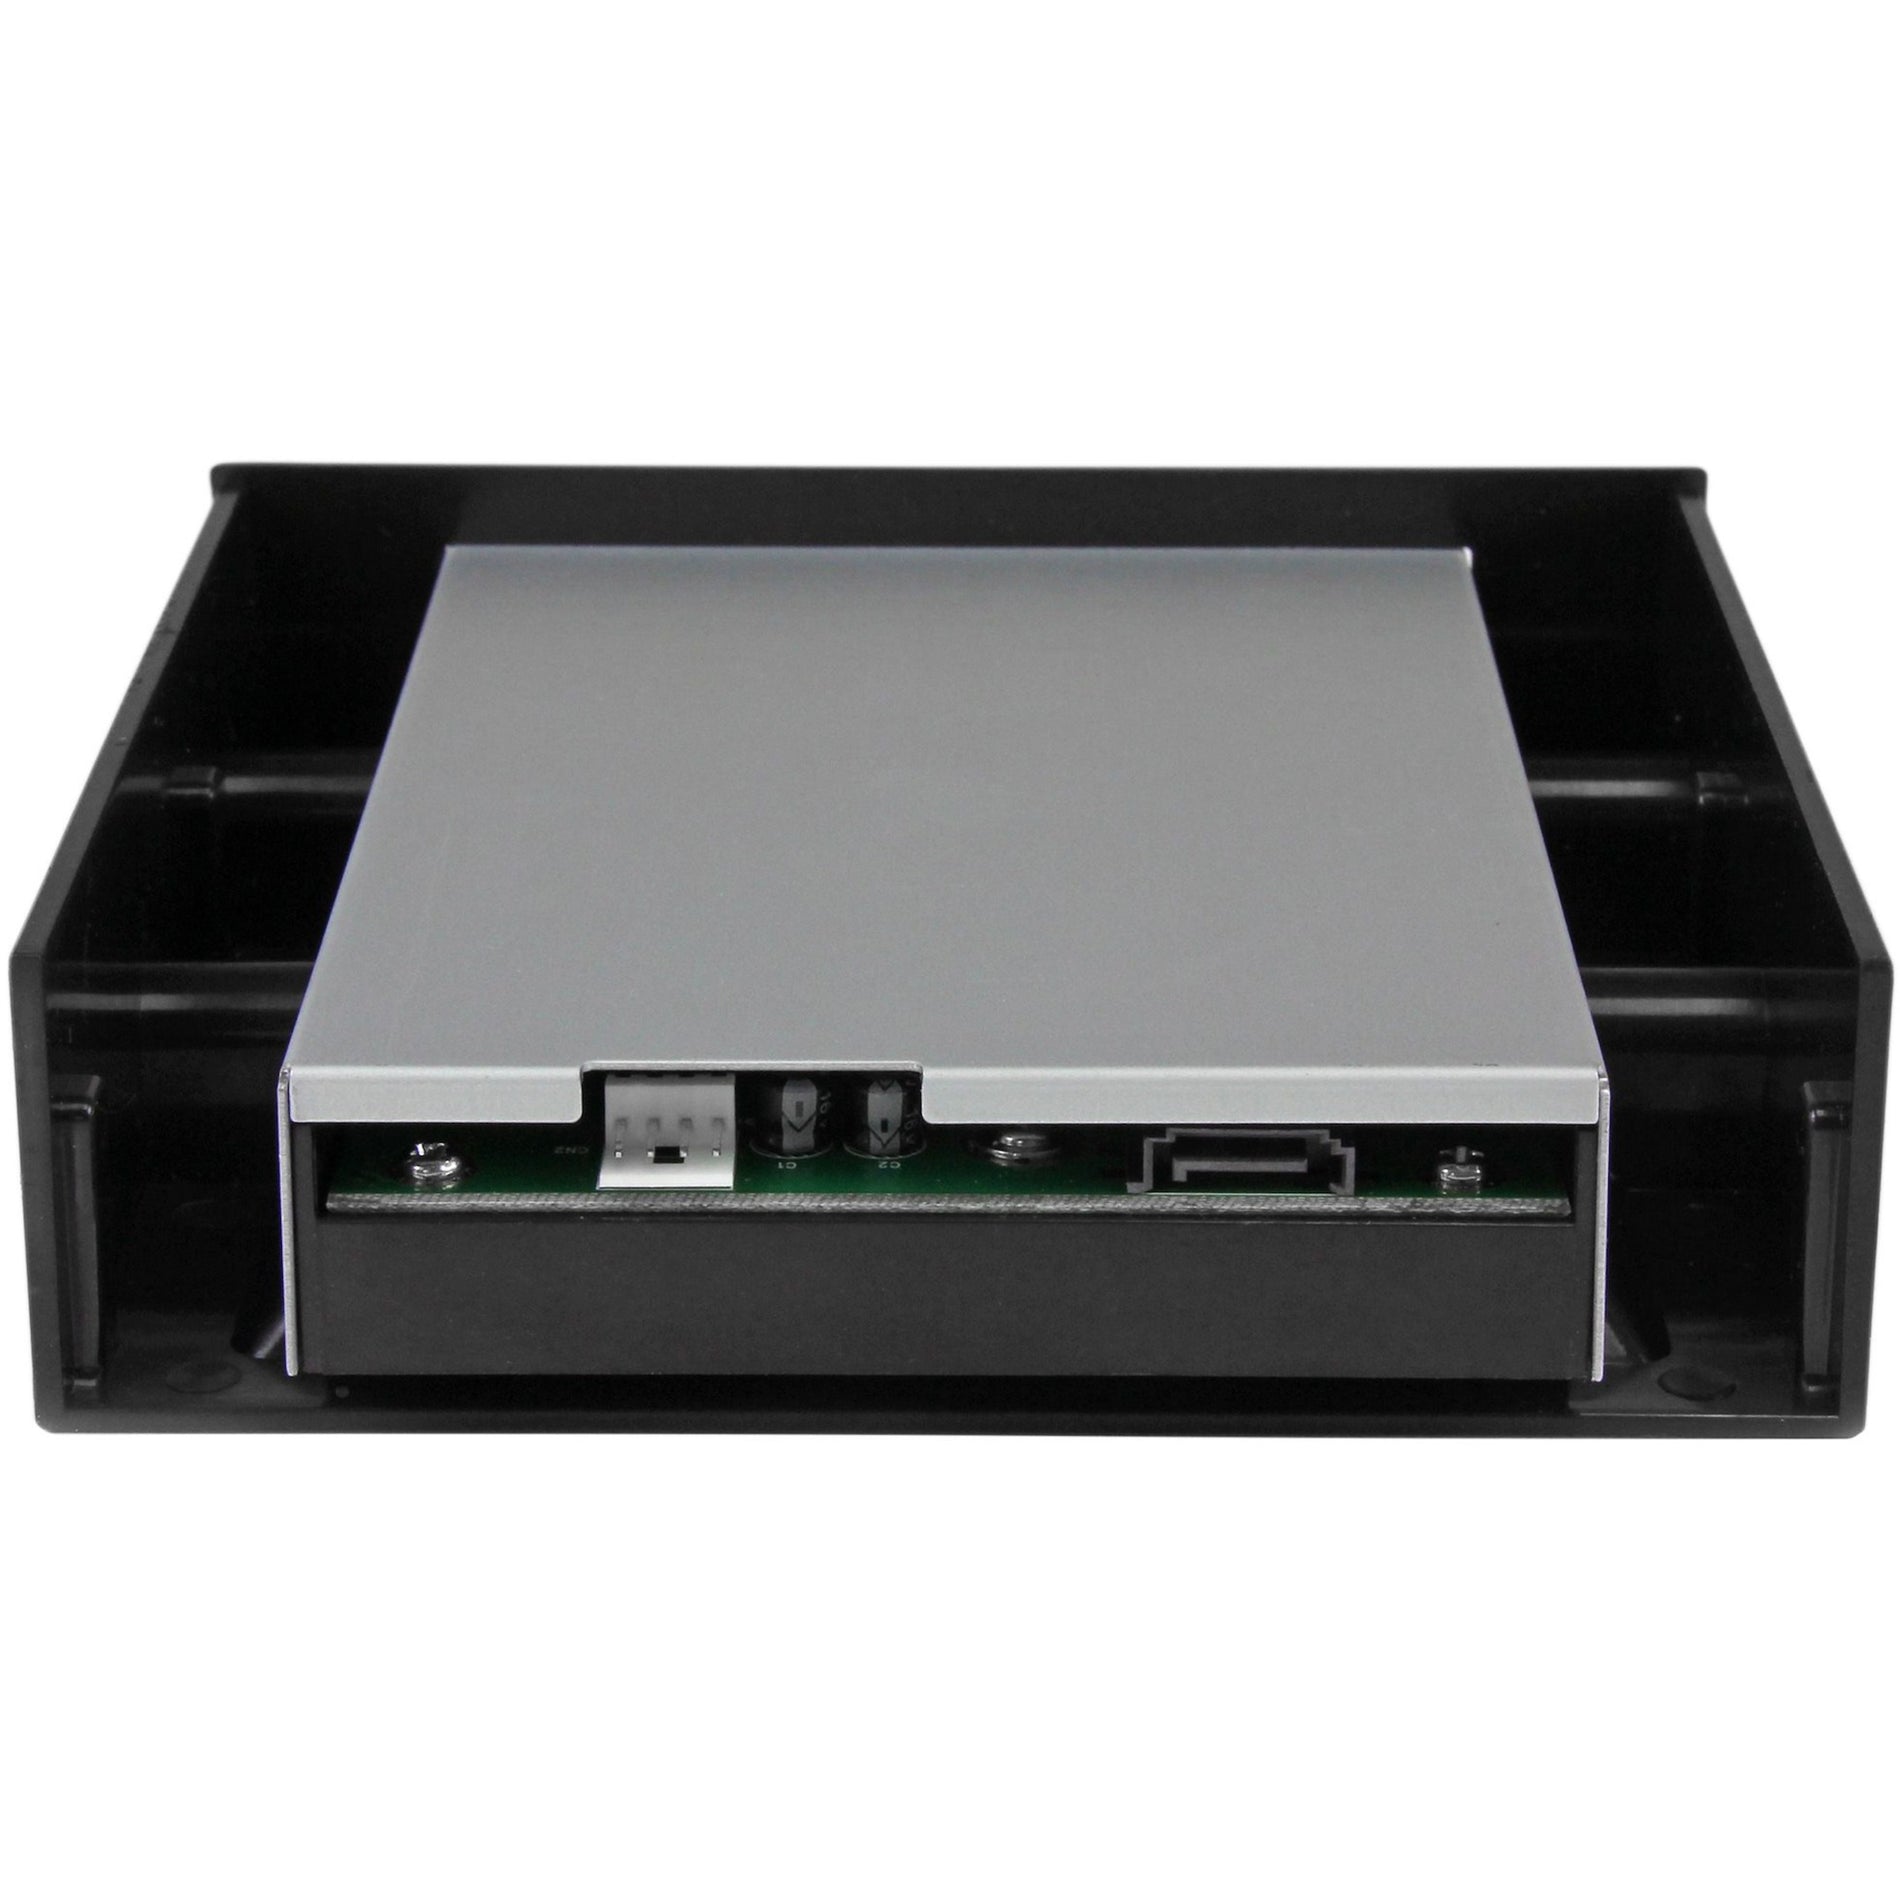 StarTech.com S251BU31REM Hot-Swap Hard Drive Bay for 2.5" SATA SSD / HDD, USB 3.1 (10Gbps) Enclosure